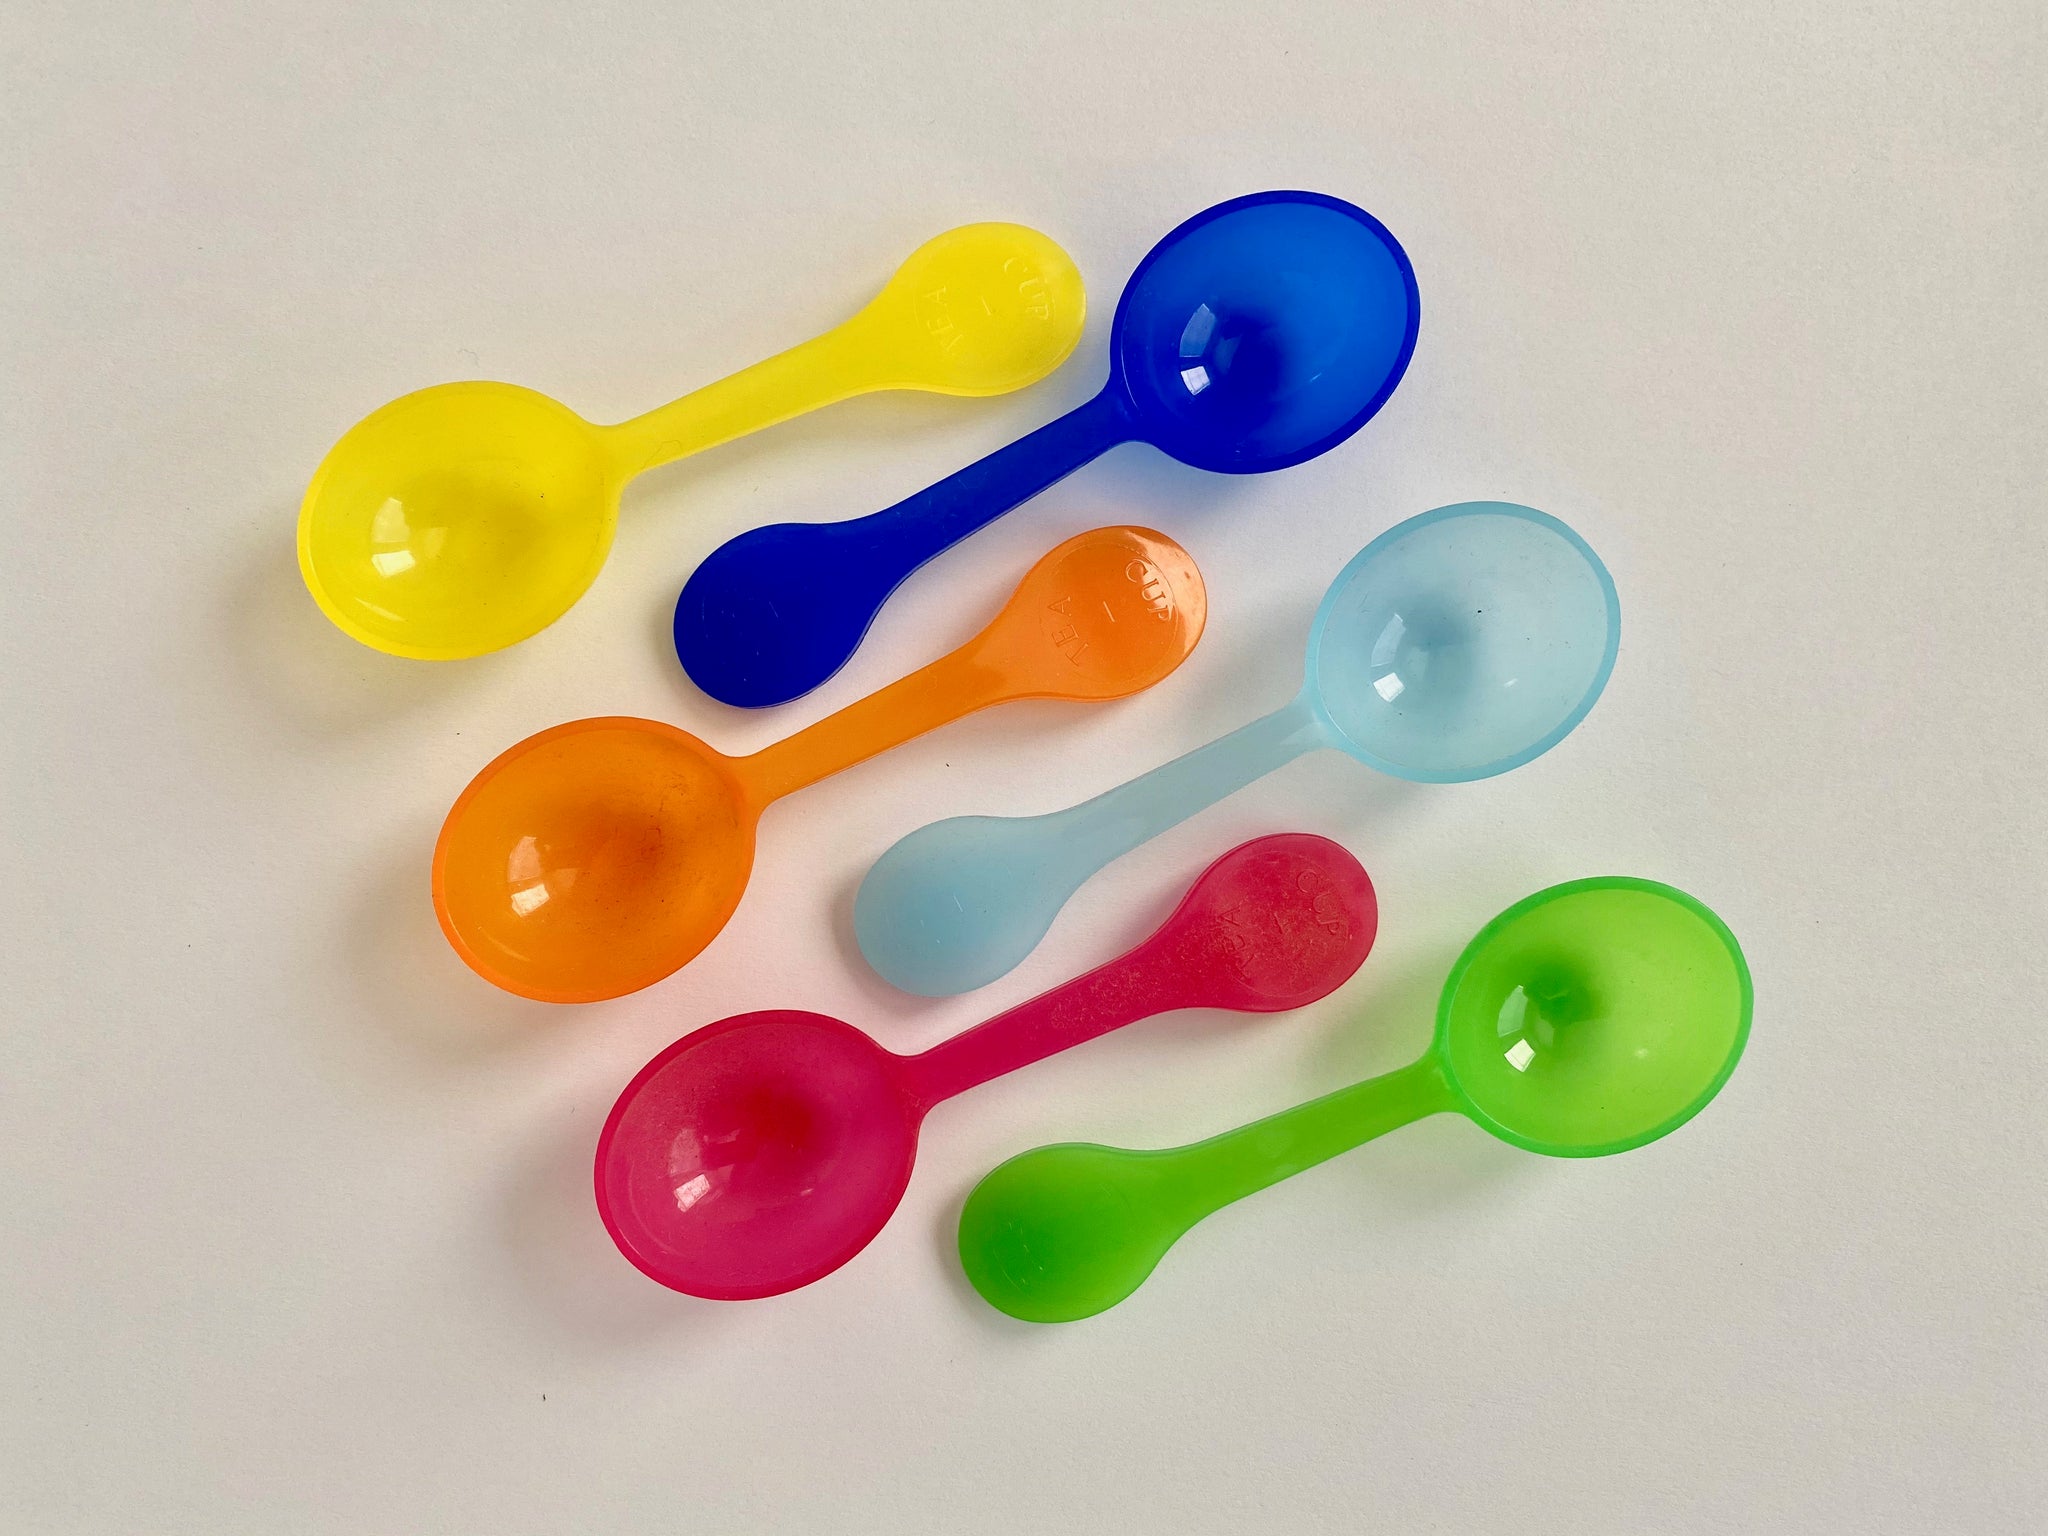 Plastic measuring spoons